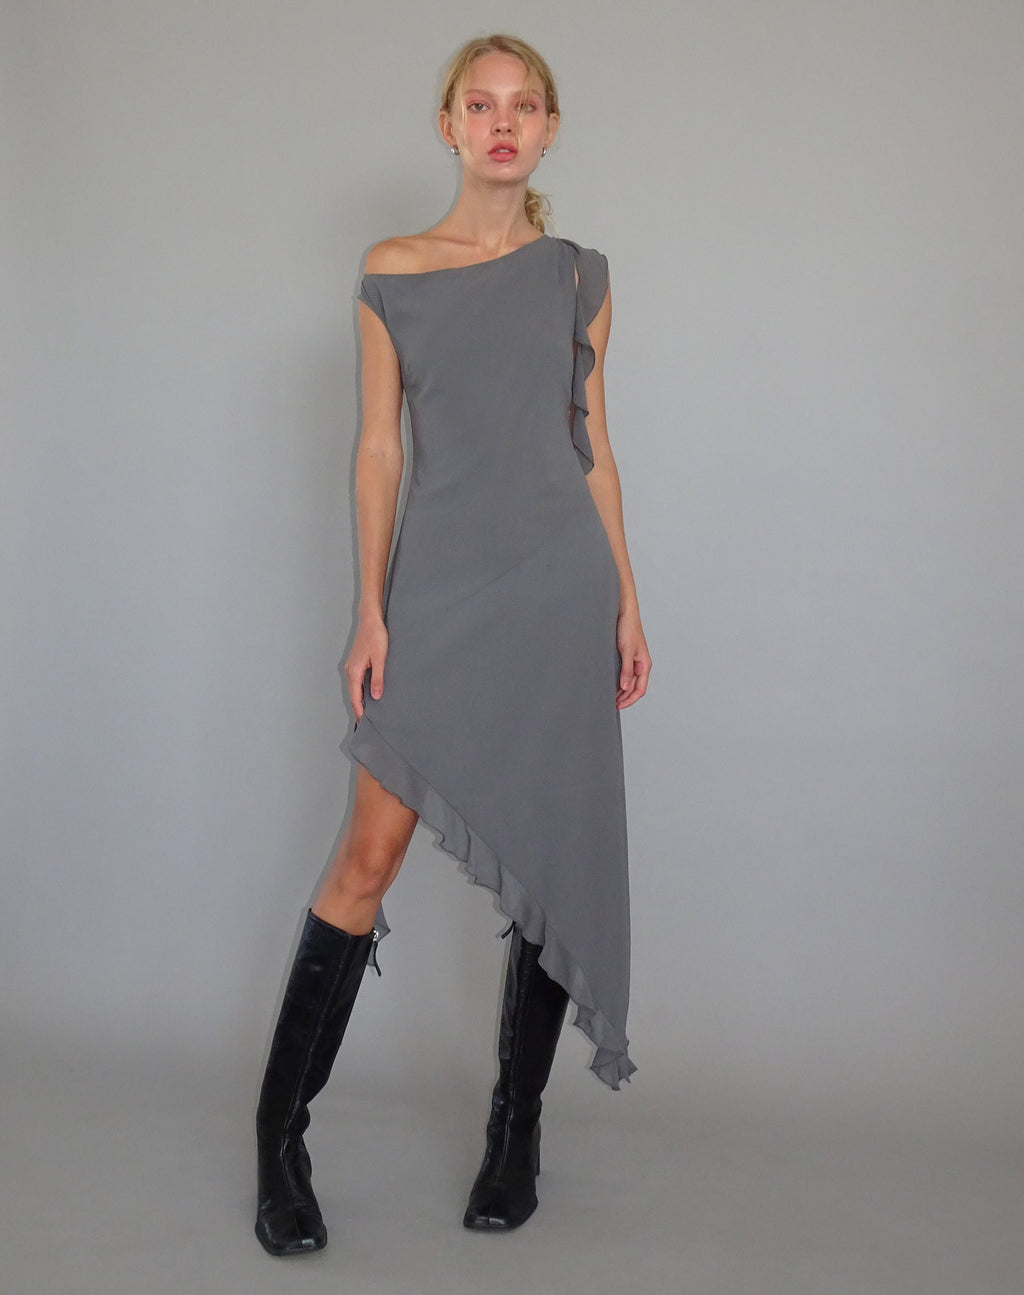 Beleri Ruffle Asymmetric Dress in Grey Chiffon